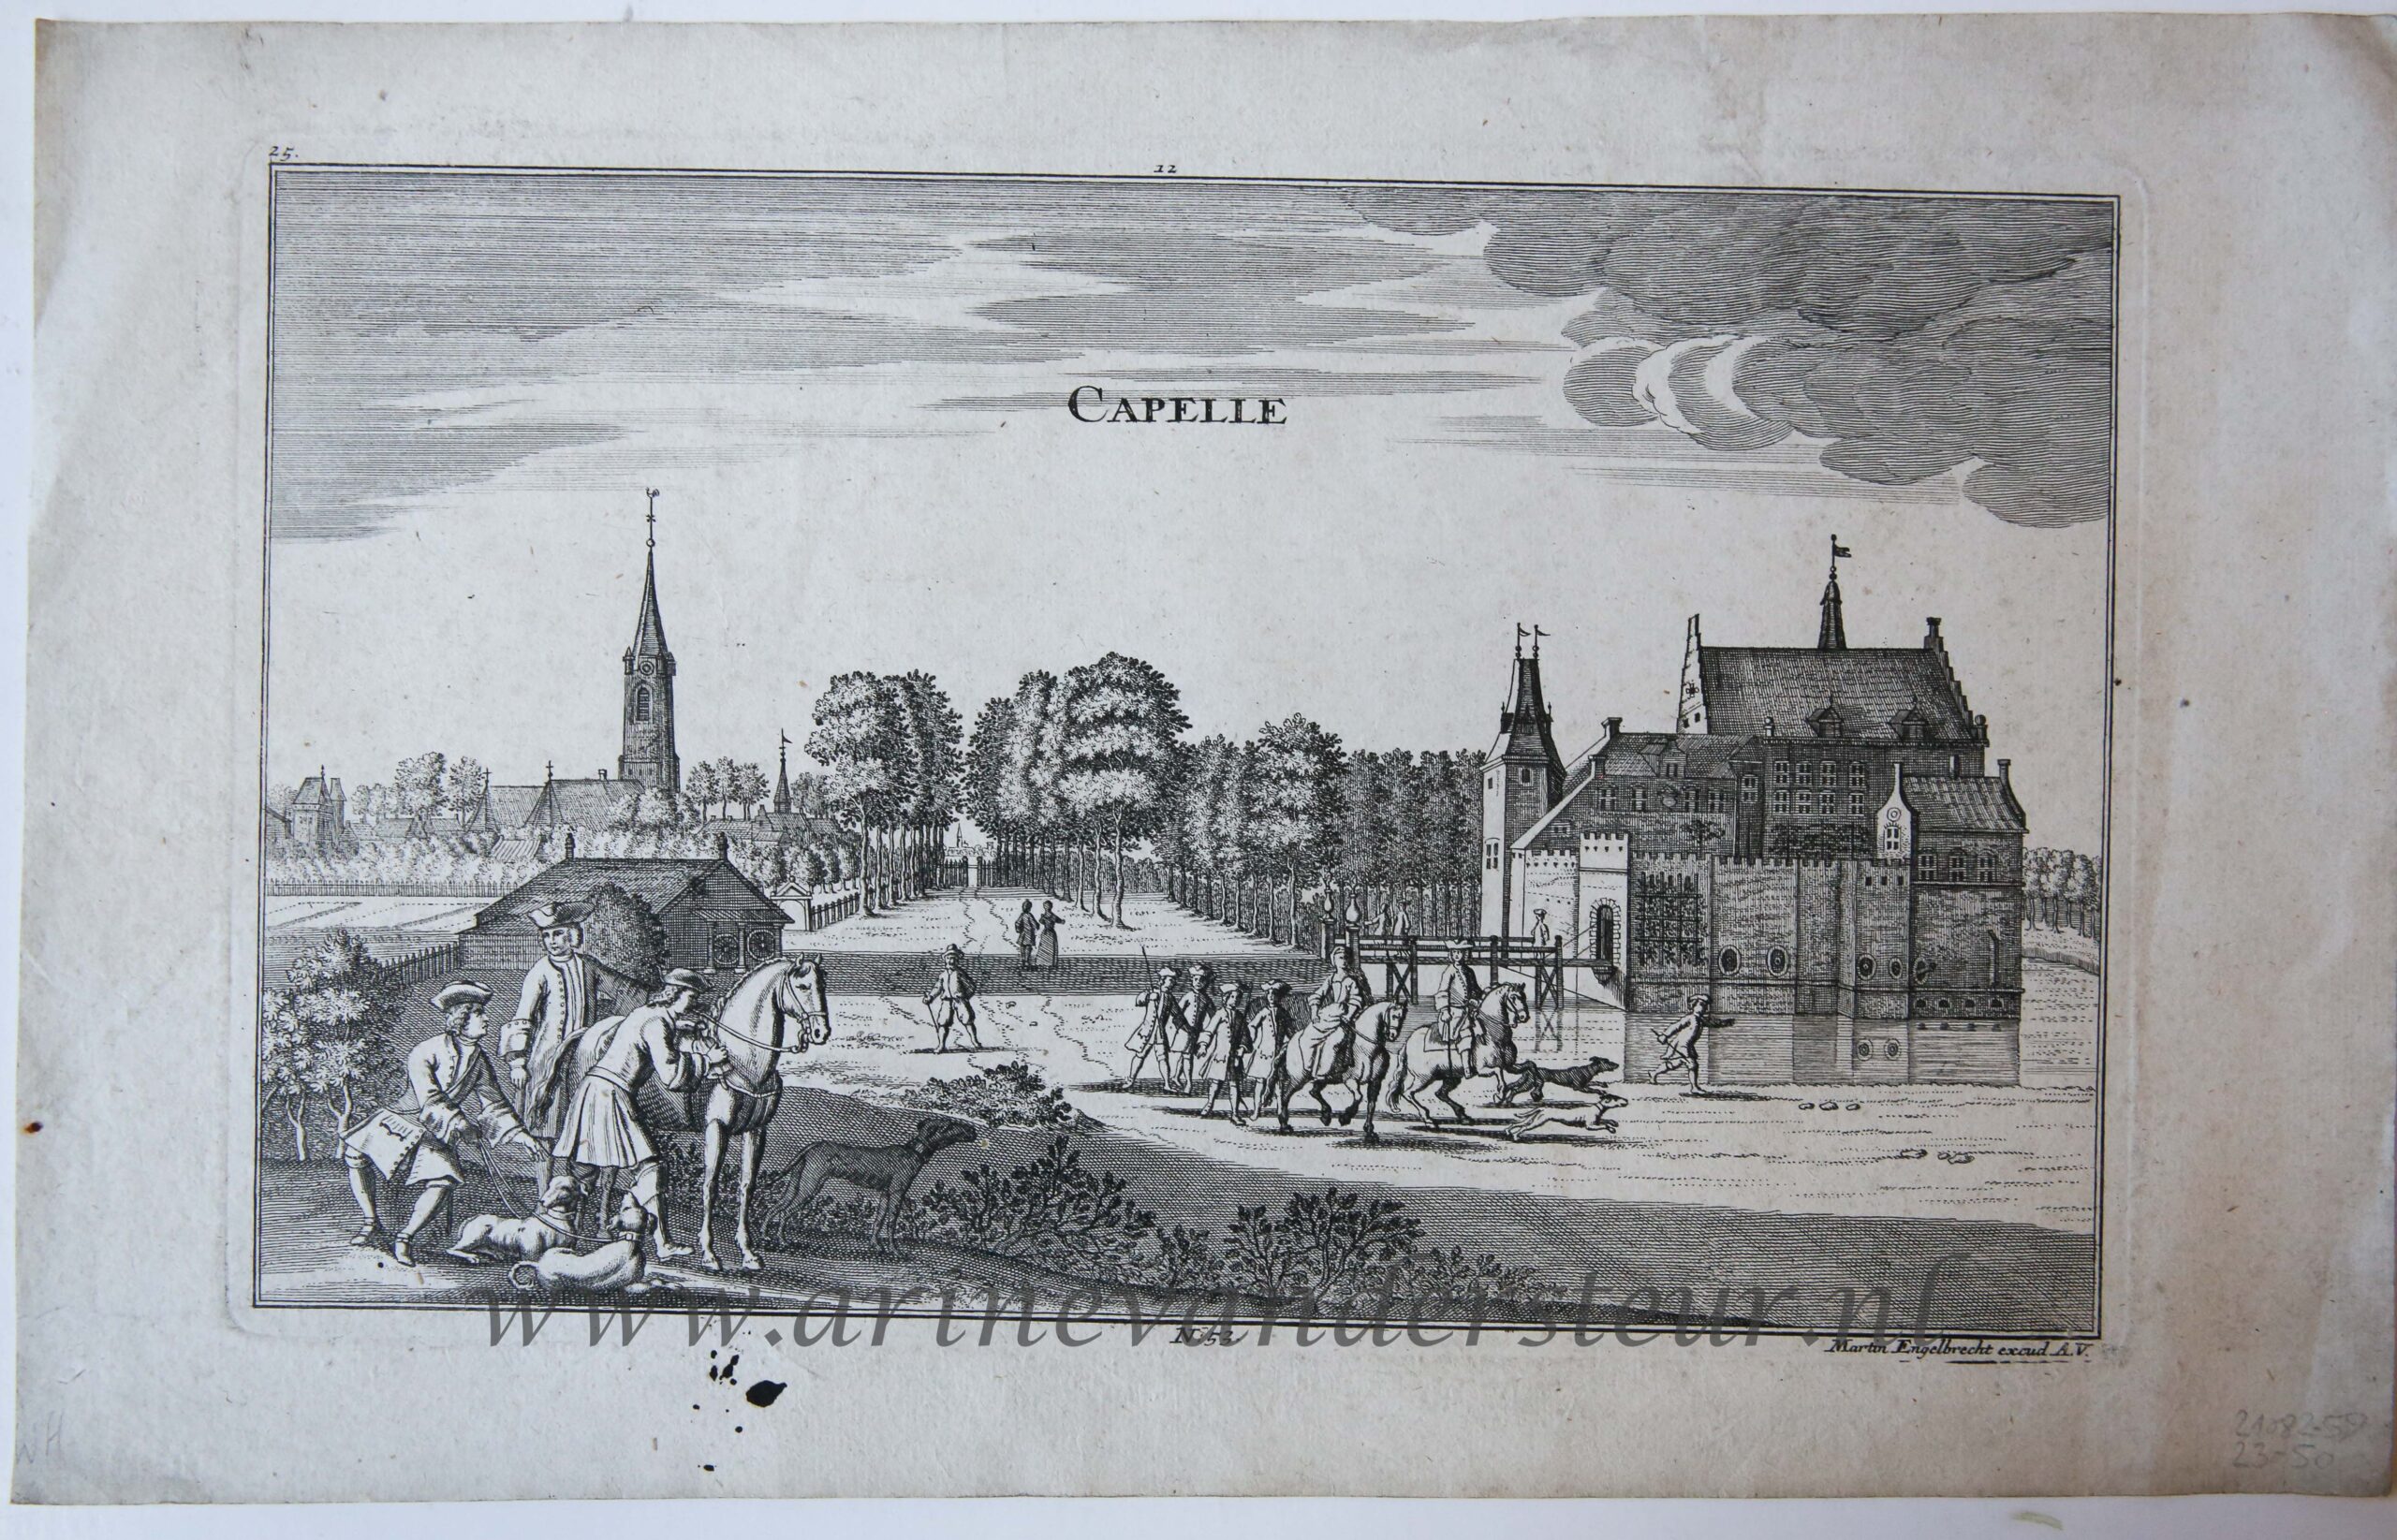 [Antique print, engraving] CAPELLE (Kapelle in Zeeland), published ca. 1720.